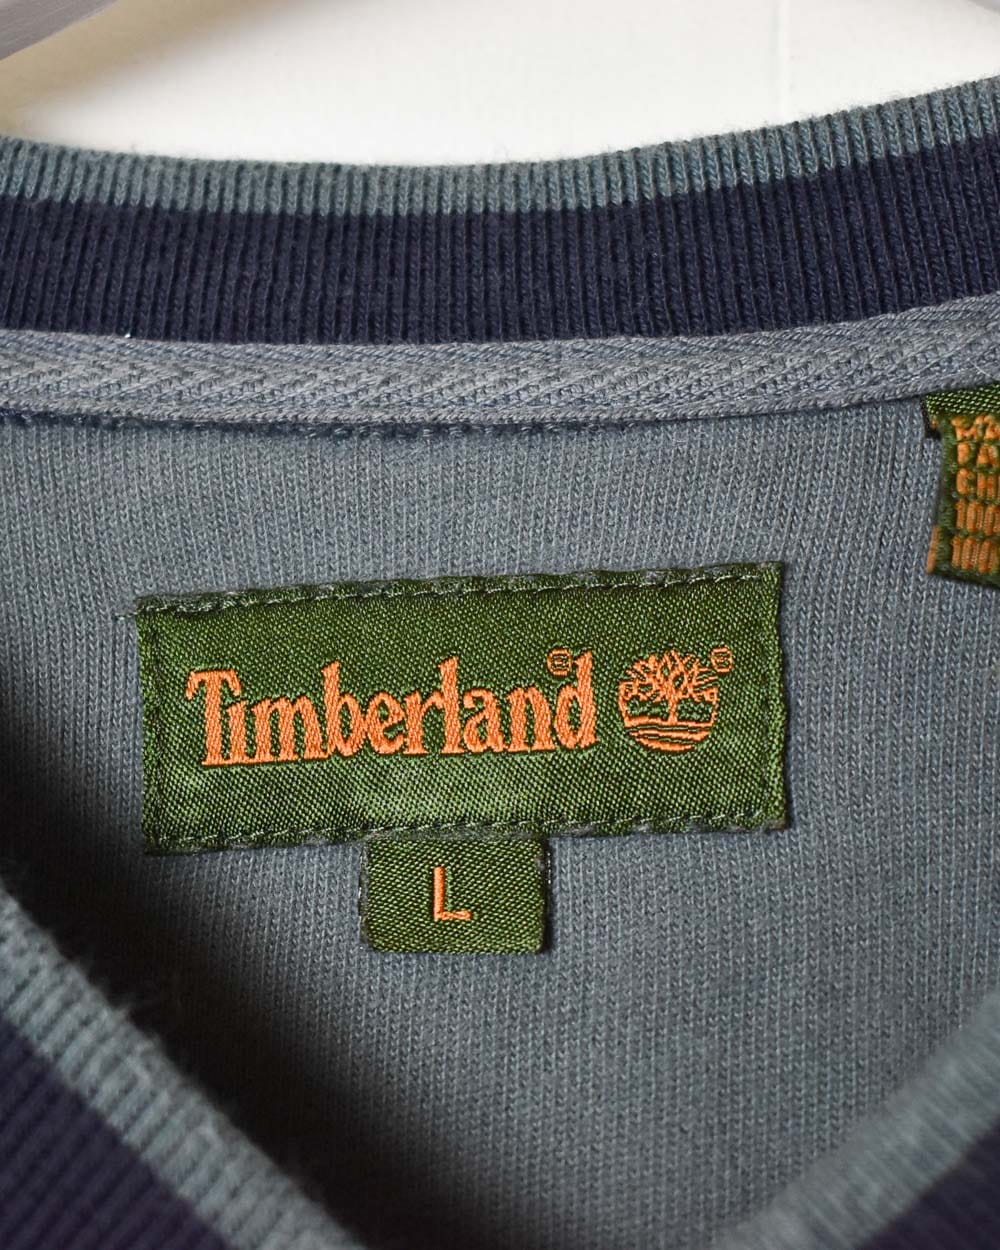 Navy Timberland Sweatshirt - Large